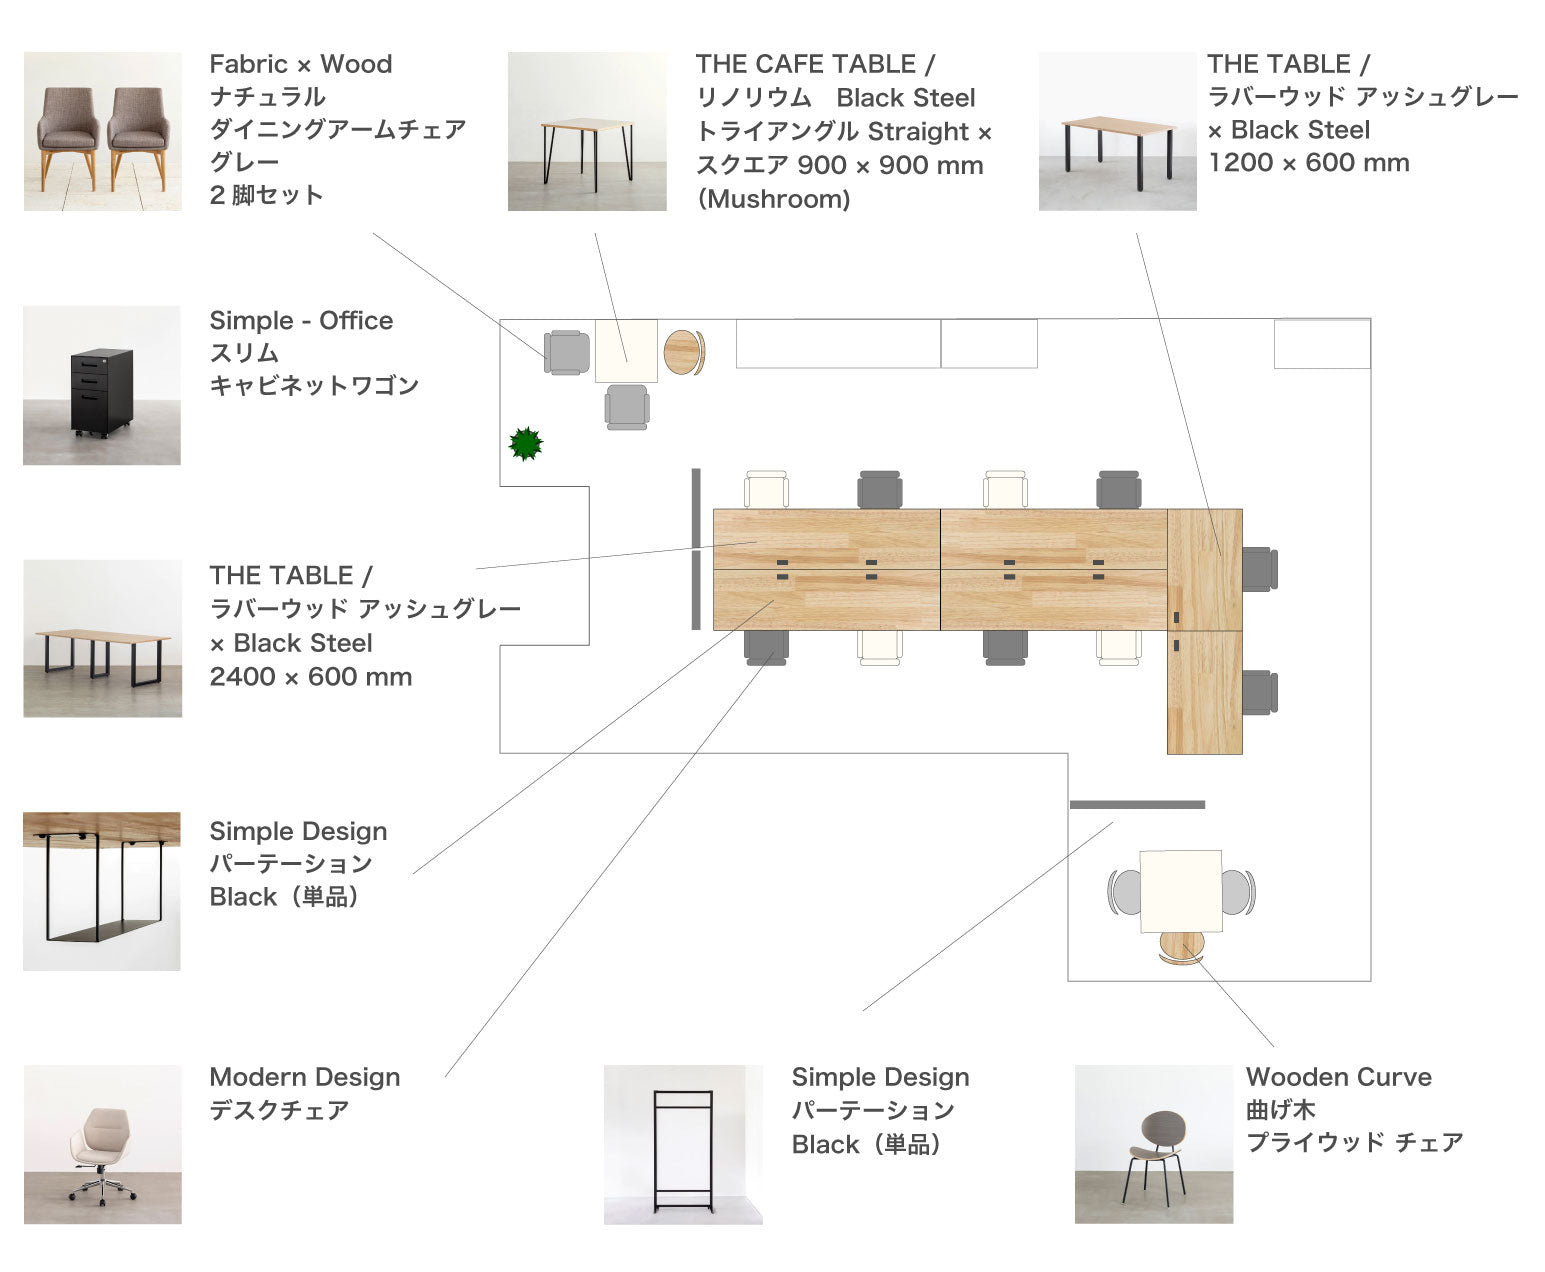 KANADEMONO コーディネート家具を採用の株式会社フォーシーカンパニーレイアウト図